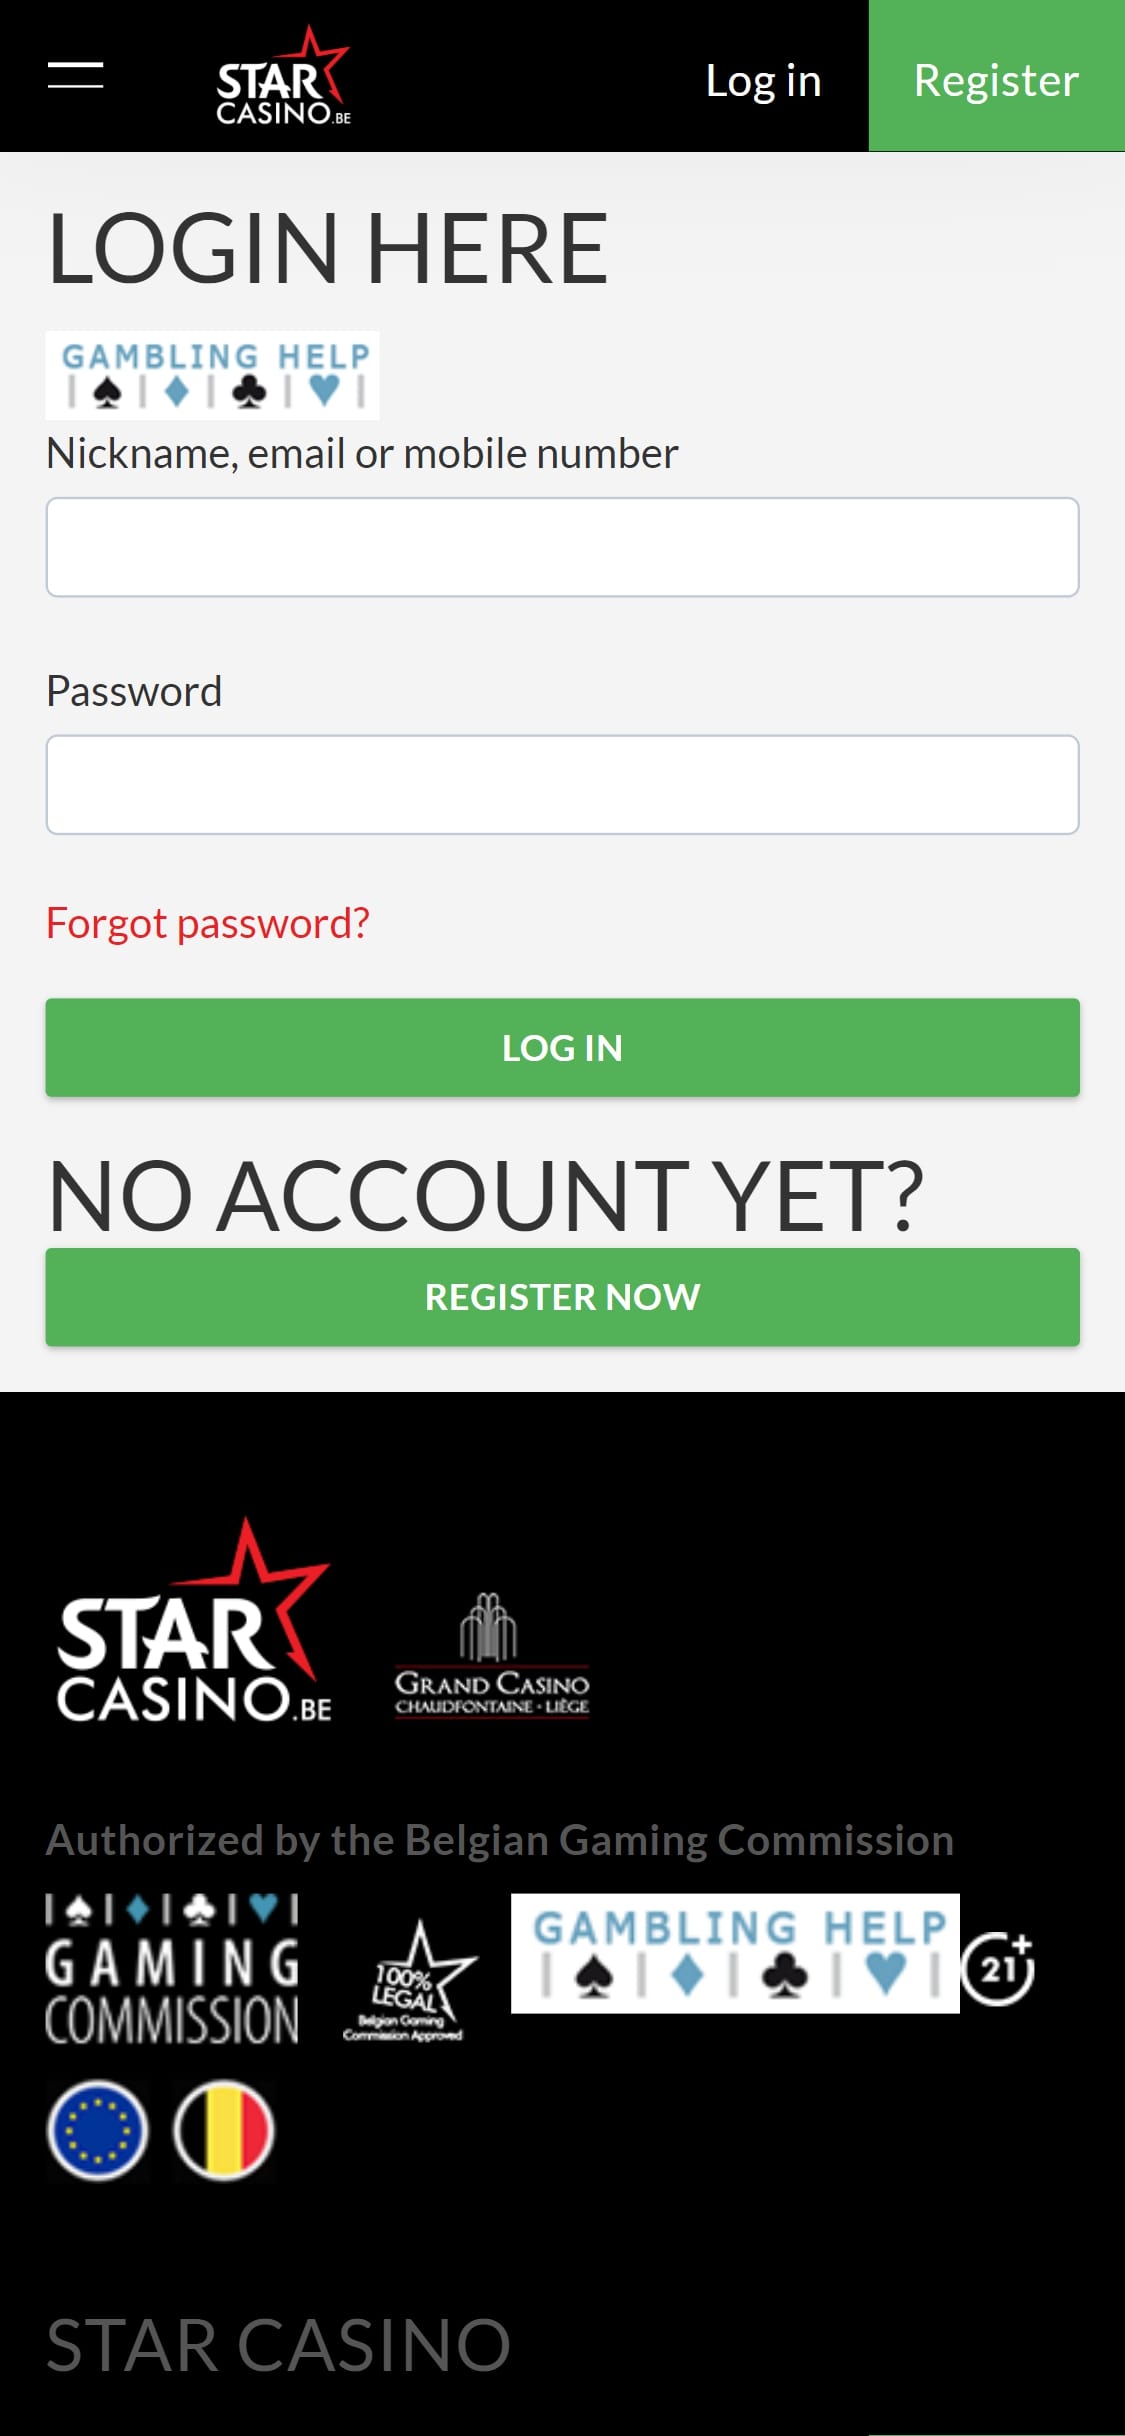 StarCasino.be Mobile Login Review